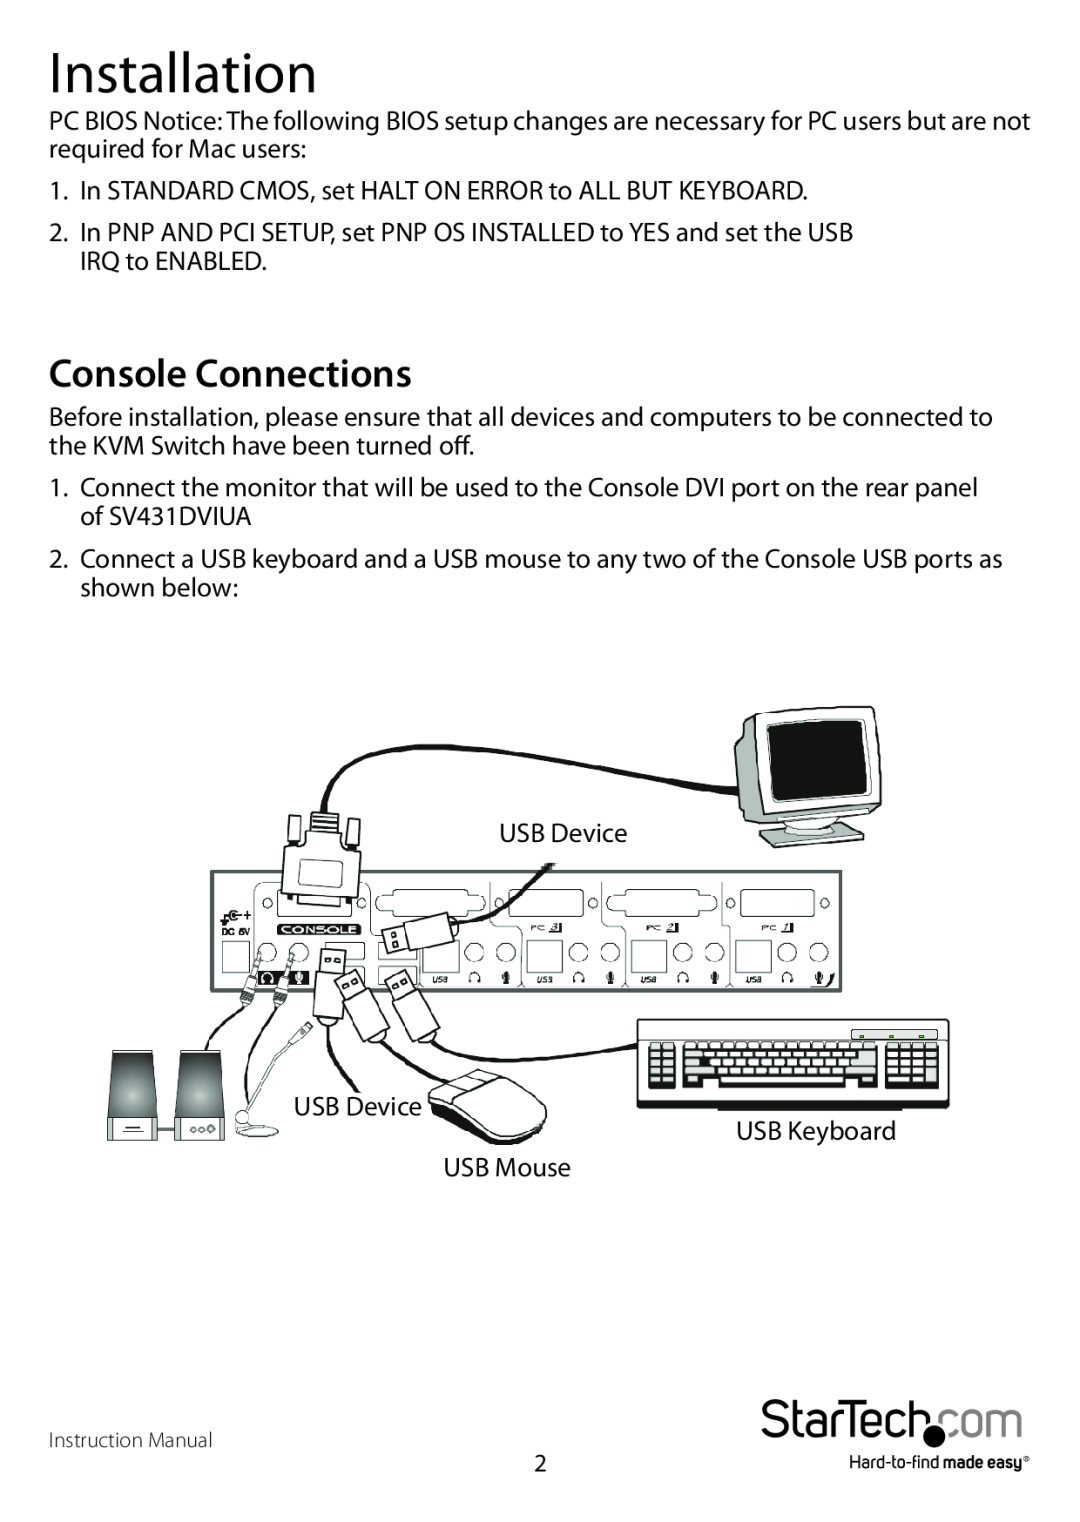 StarTech.com SV431-DVIUA manual Installation, Console Connections 